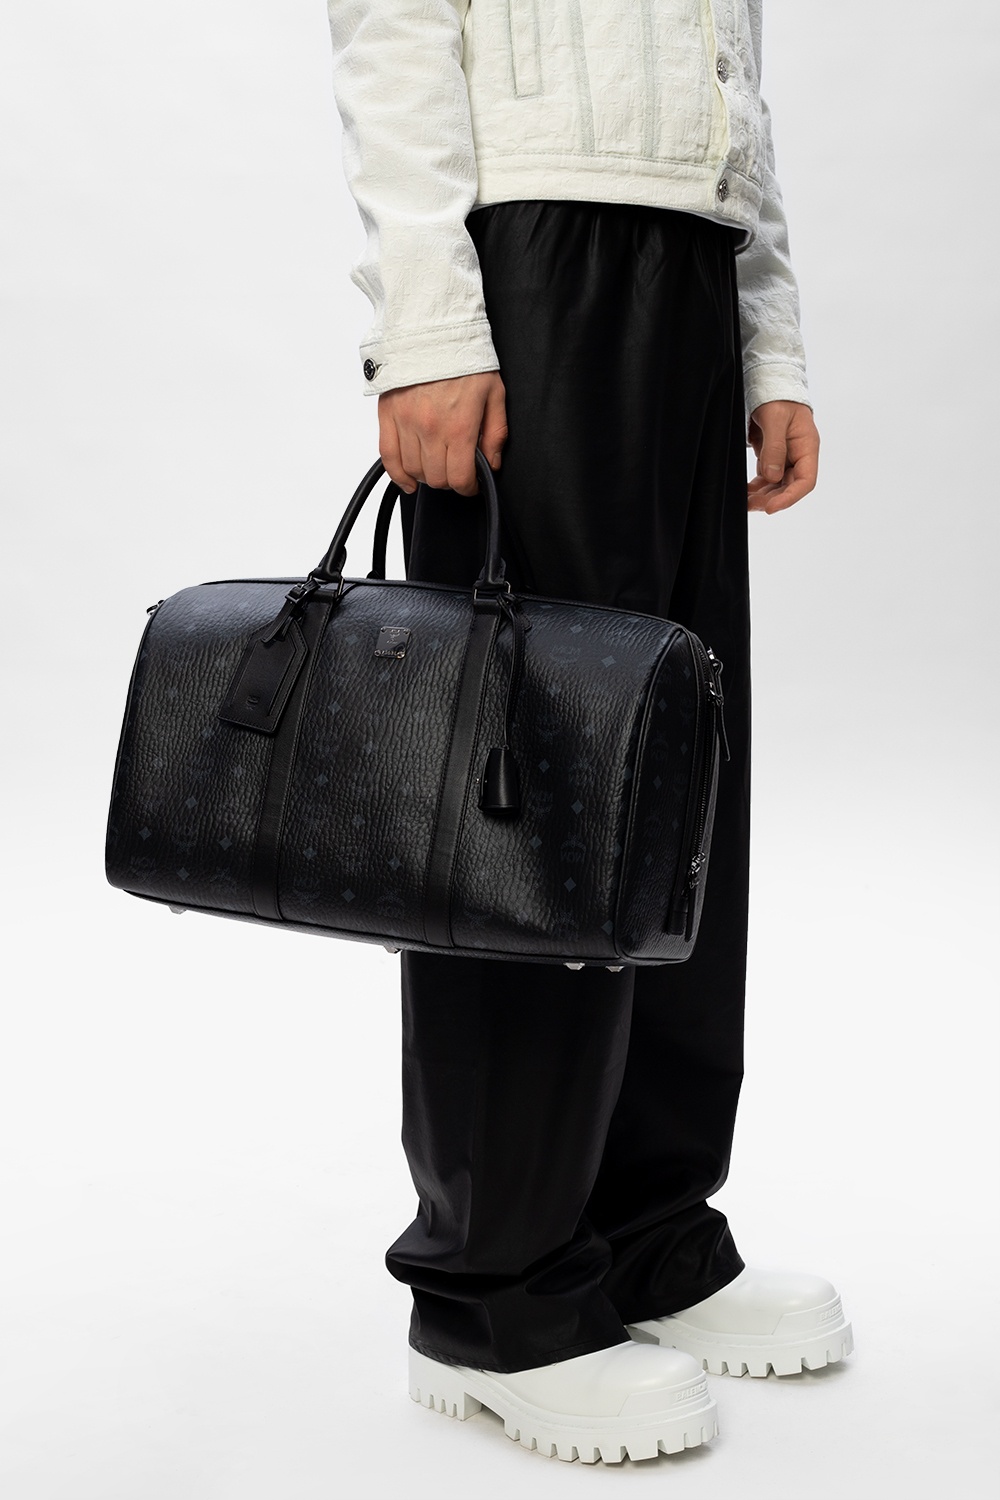 MCM Giambattista Valli structured leather tote bag